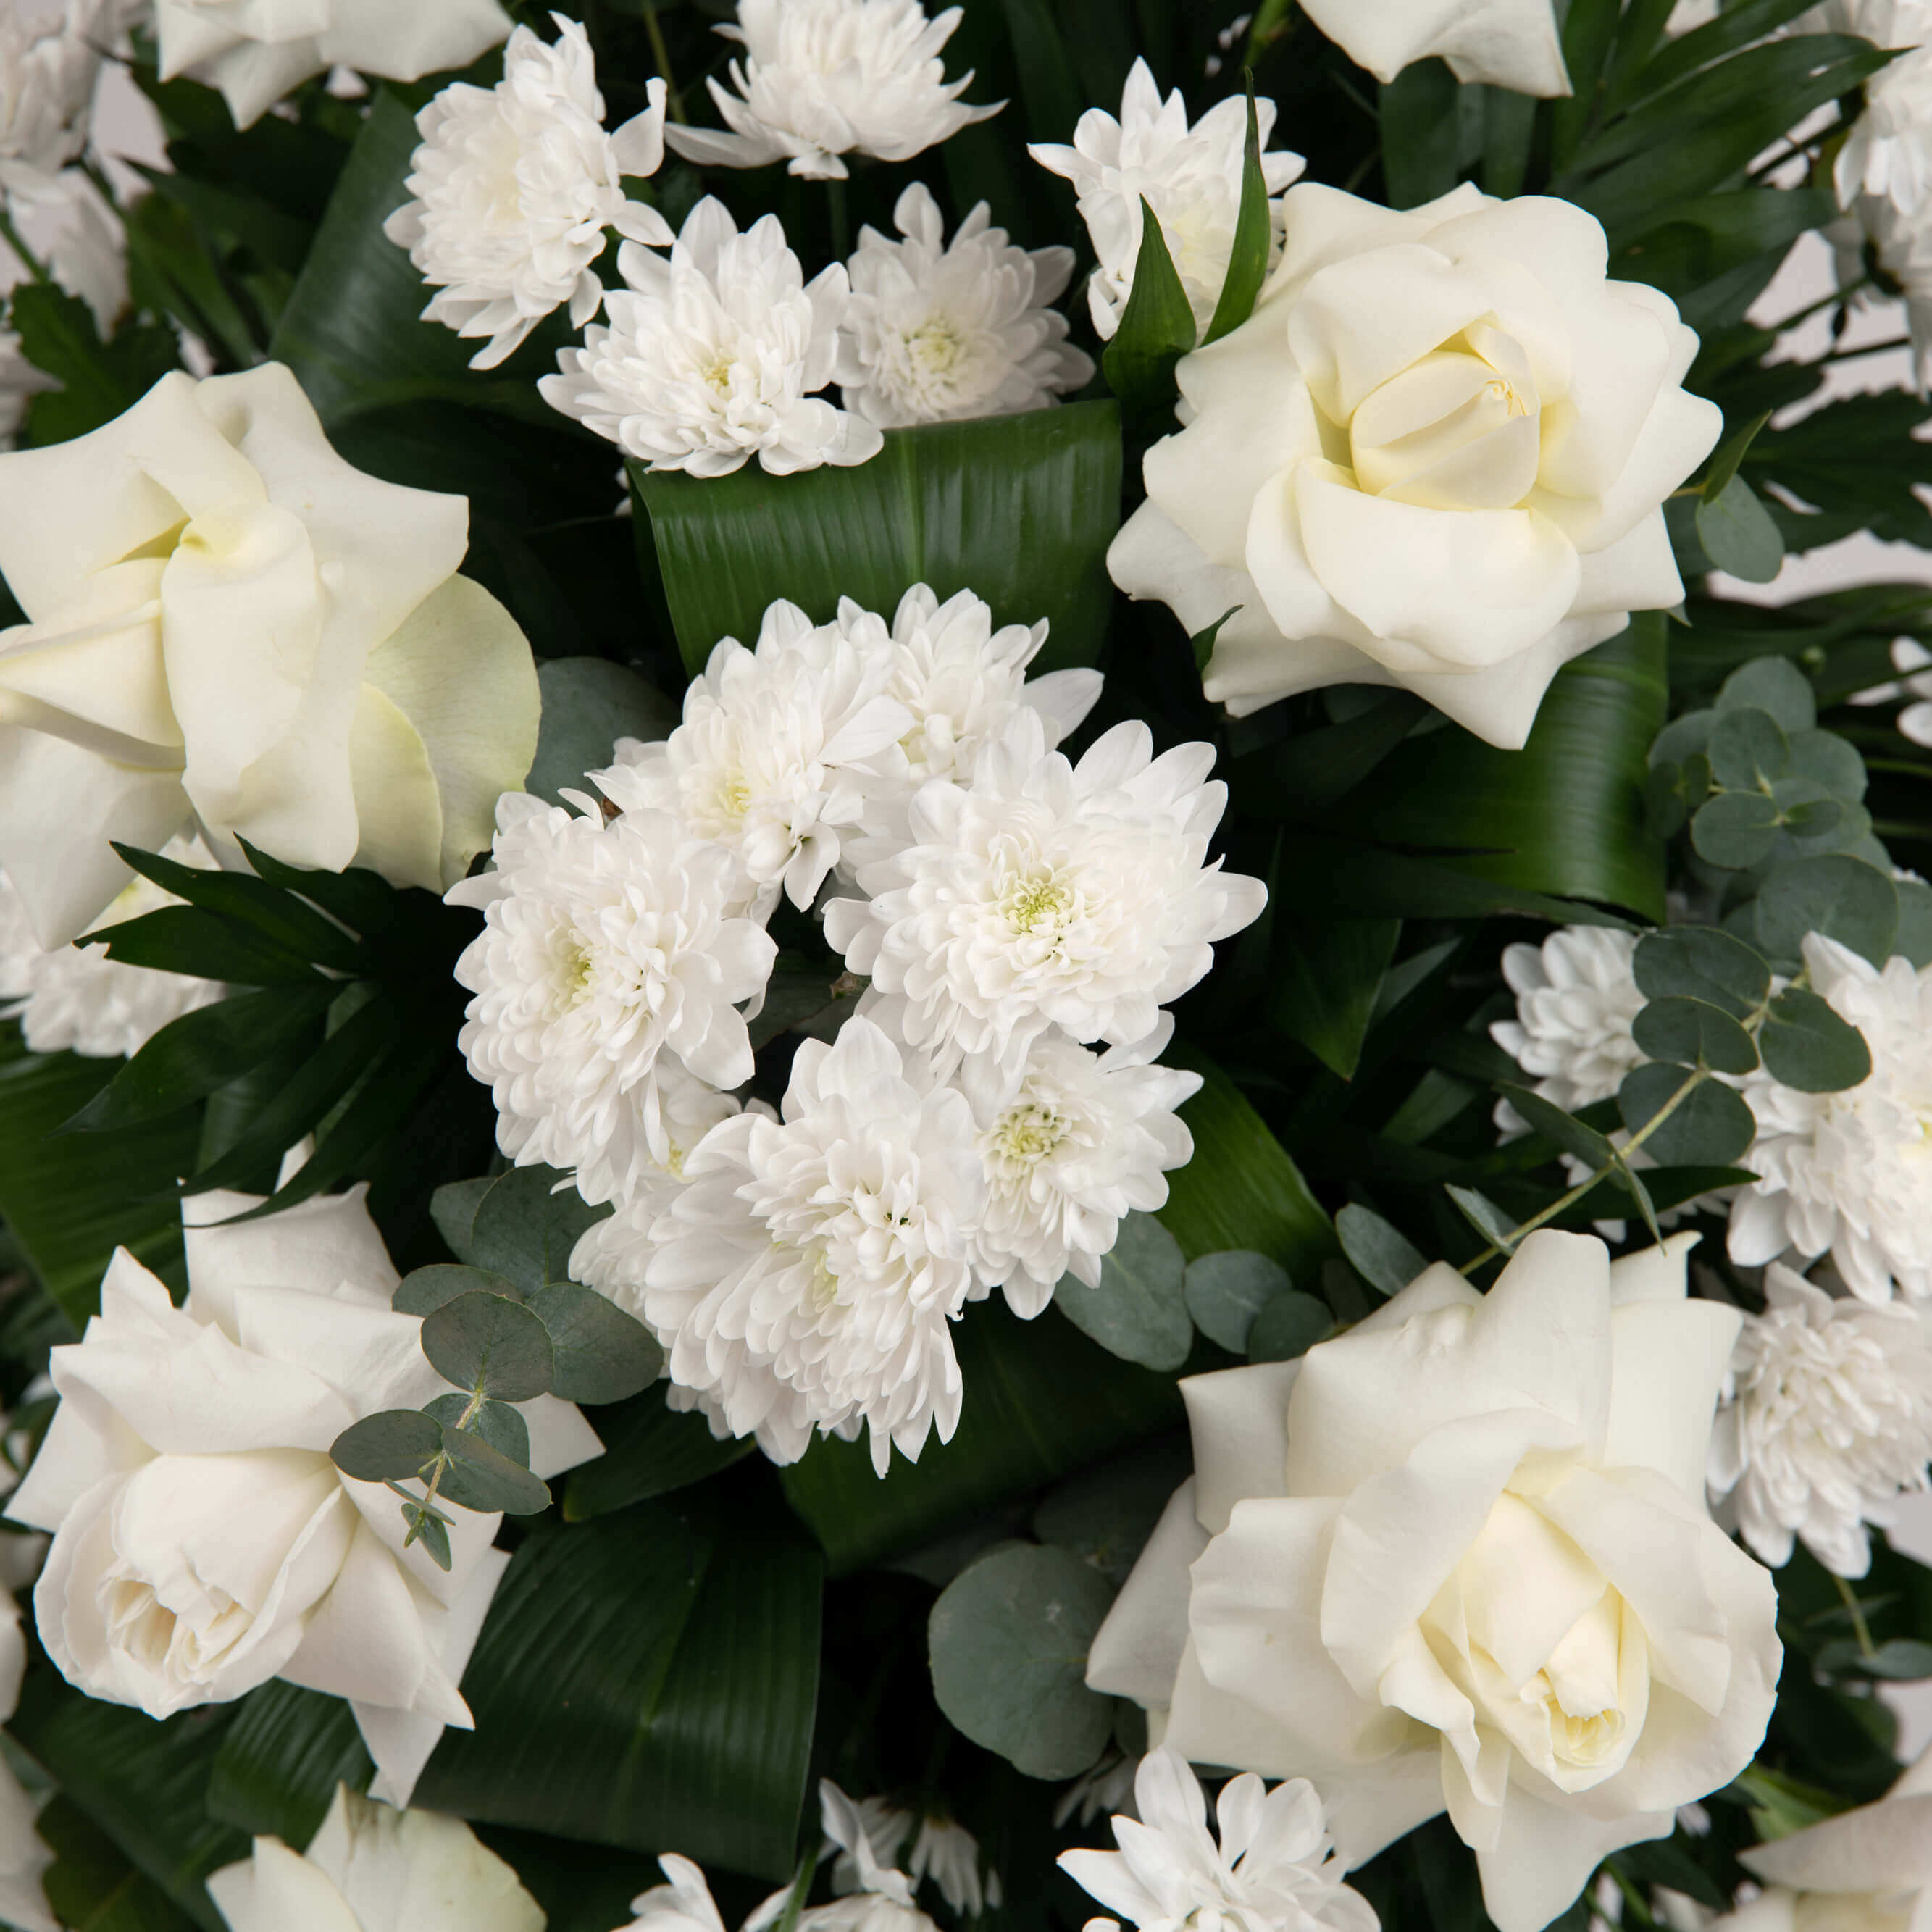 Aranjament floral funerar cu trandafiri si crizanteme albe, 2